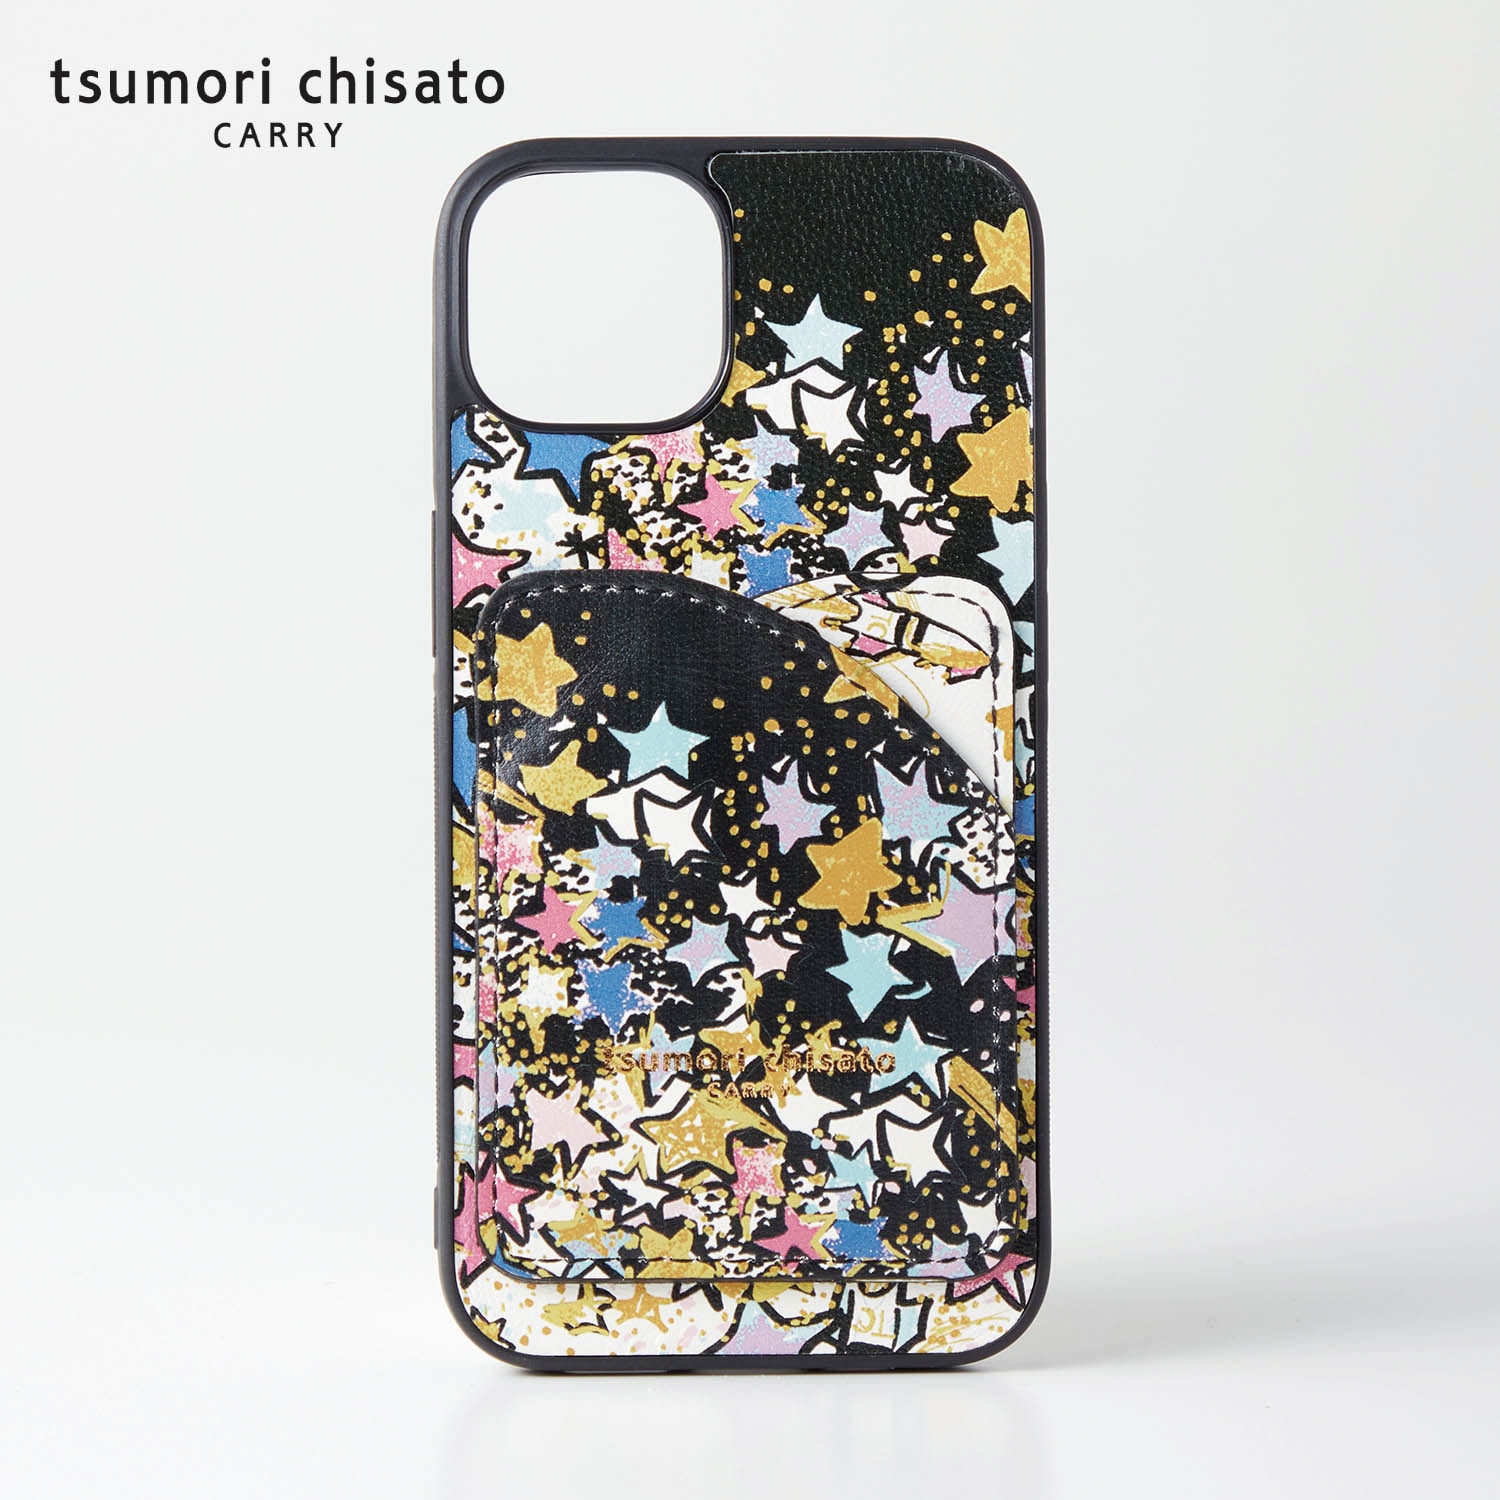 【tsumori chisato CARRY】iPhoneケース